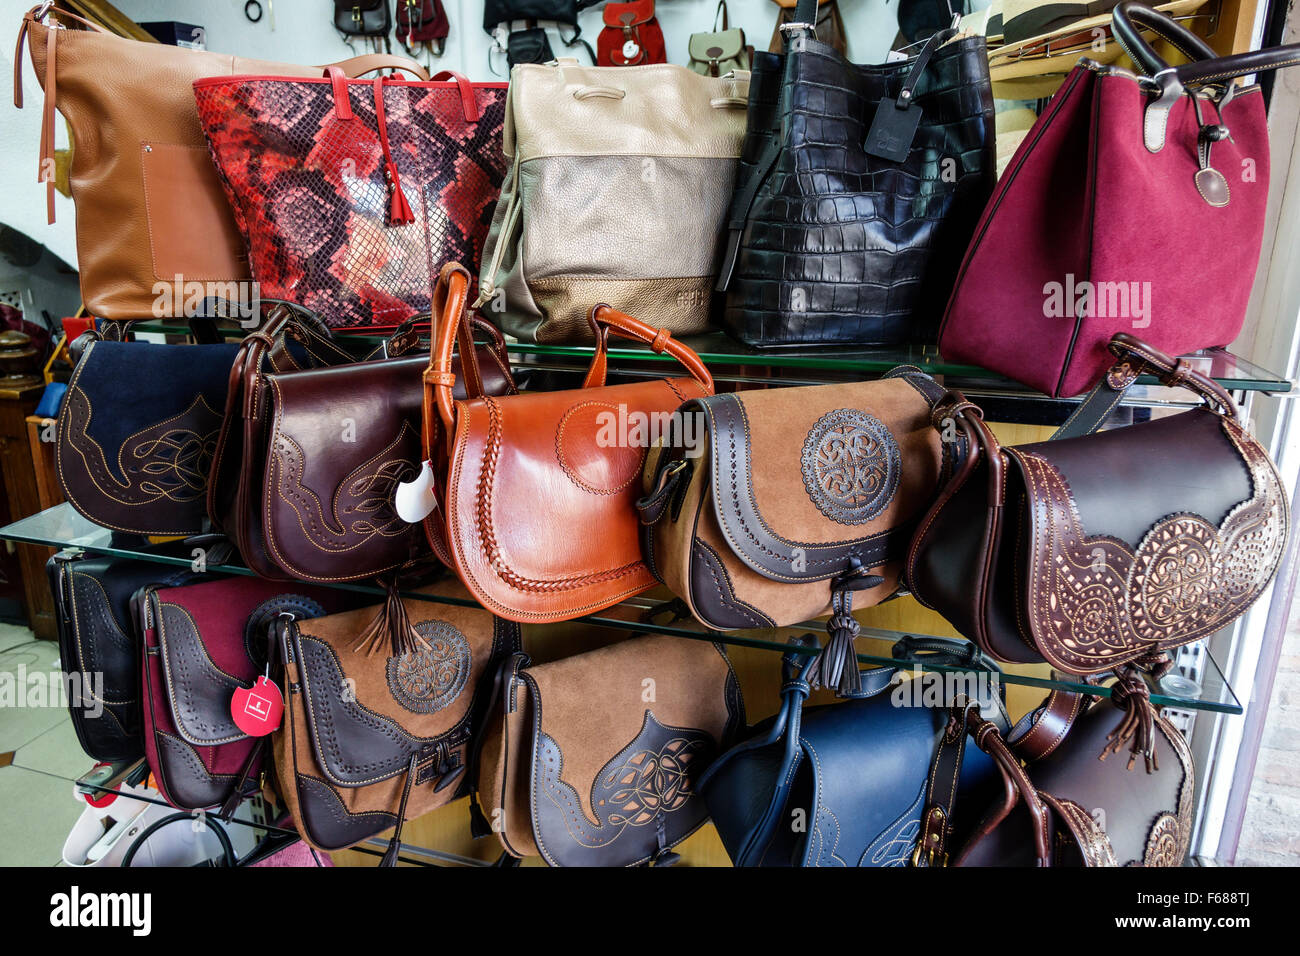 4pcs Set Of Bags For Women Large-Capacity Handbag, Shoulder Bag, Messenger  Bag And Small Purse Wallet | SHEIN